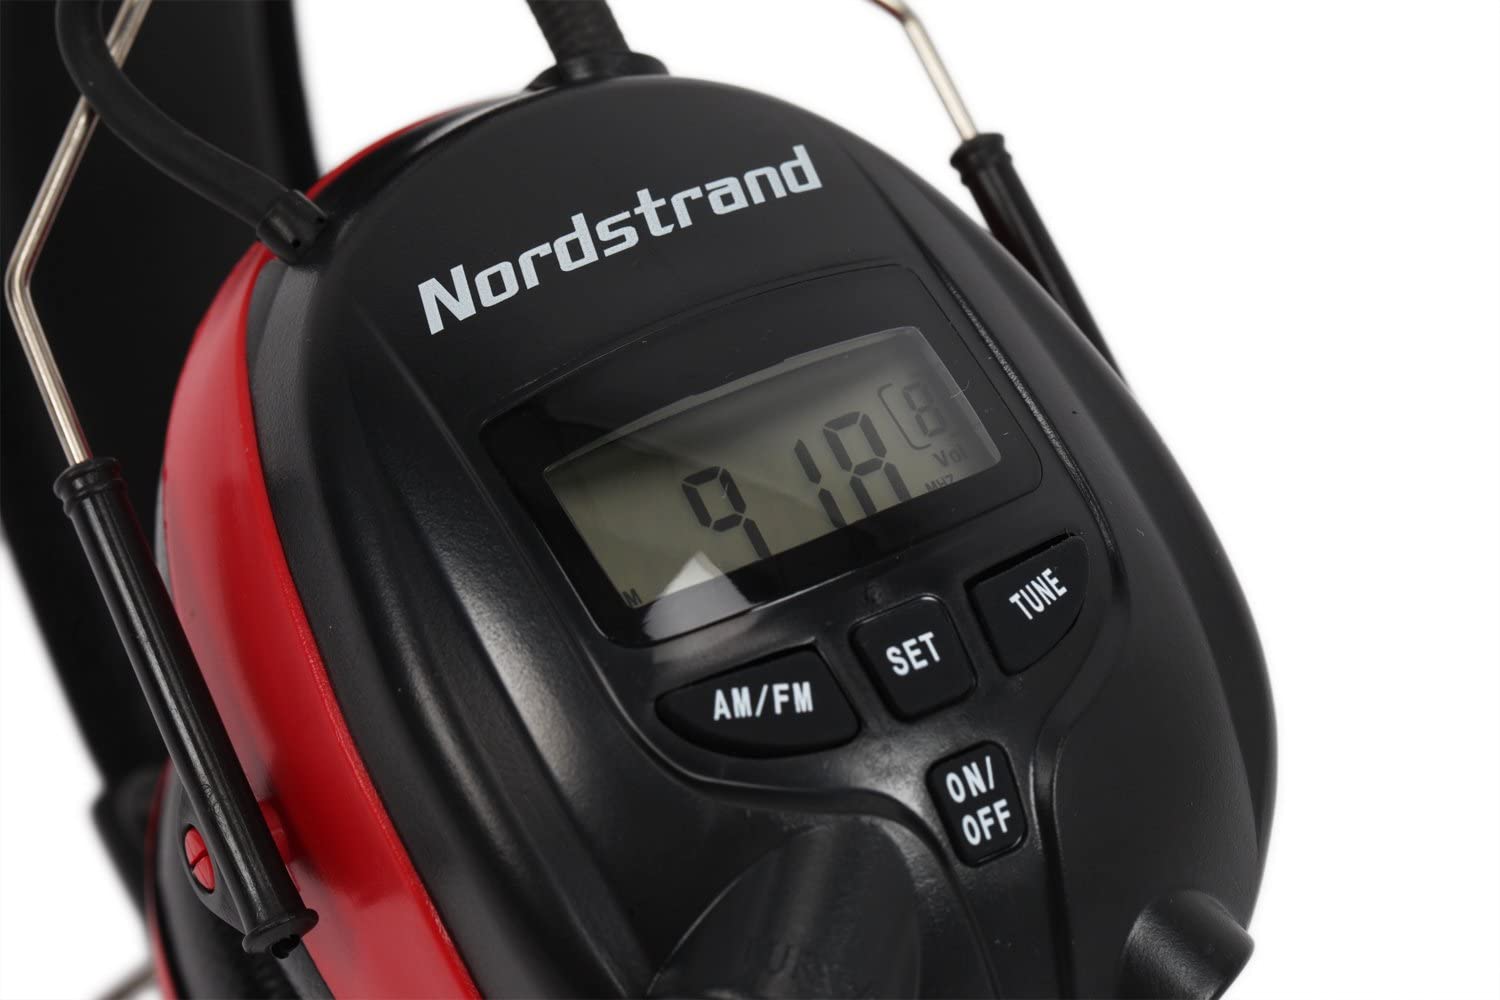 Phone Jack AM/FM Radio Nordstrand Ear Defenders Protection Muffs Headphones 